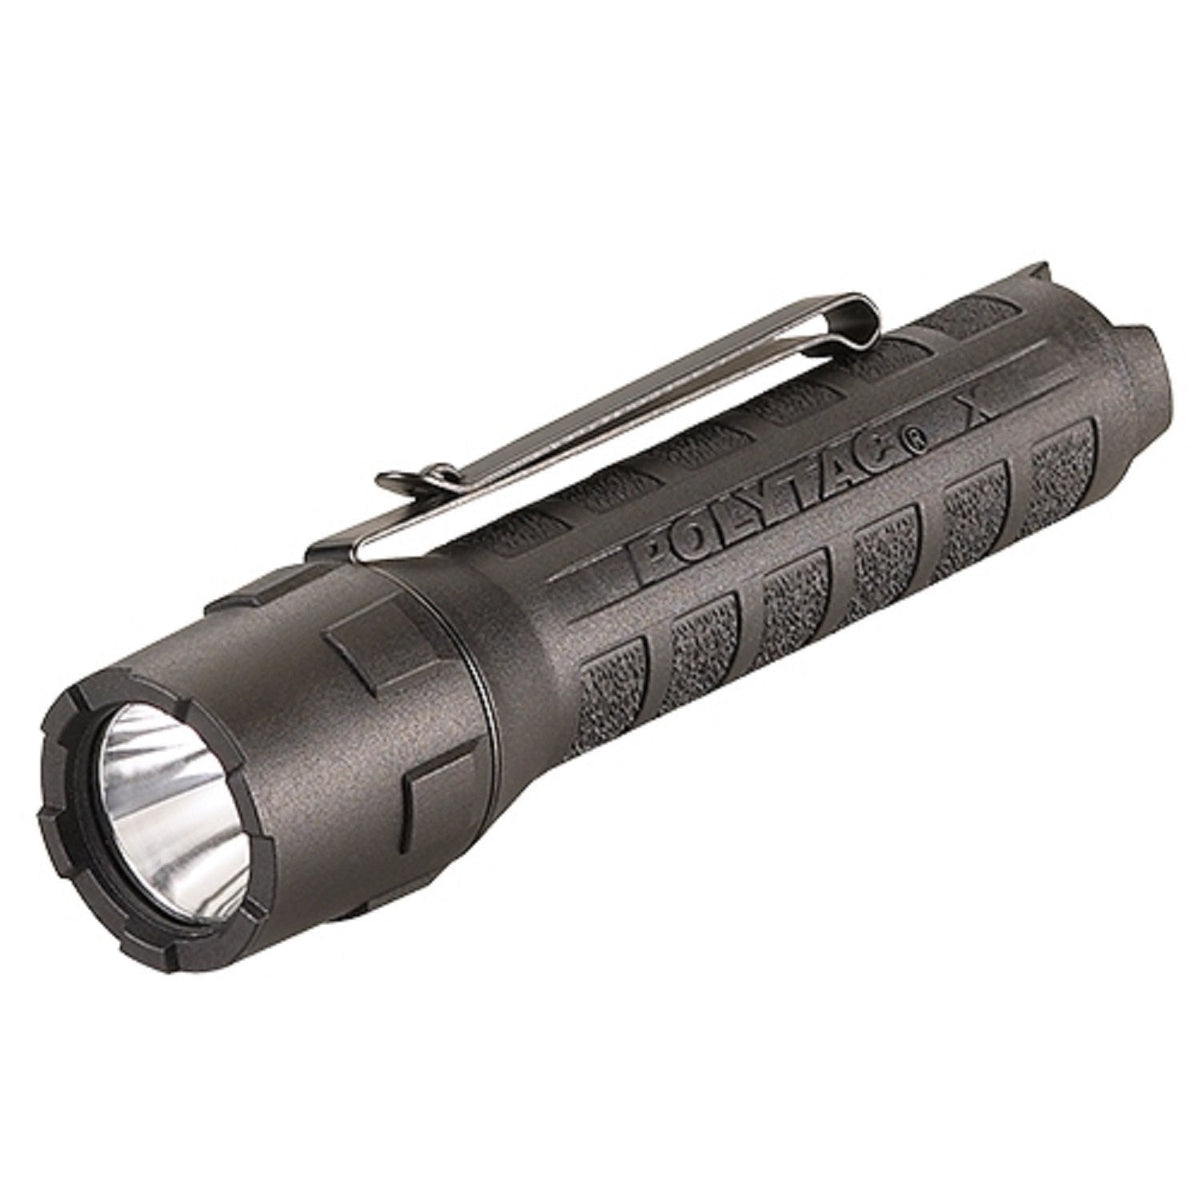 Streamlight PolyTac X USB 600-Lumens Rechargeable Flashlight Black Flashlights and Lighting Streamlight Tactical Gear Supplier Tactical Distributors Australia